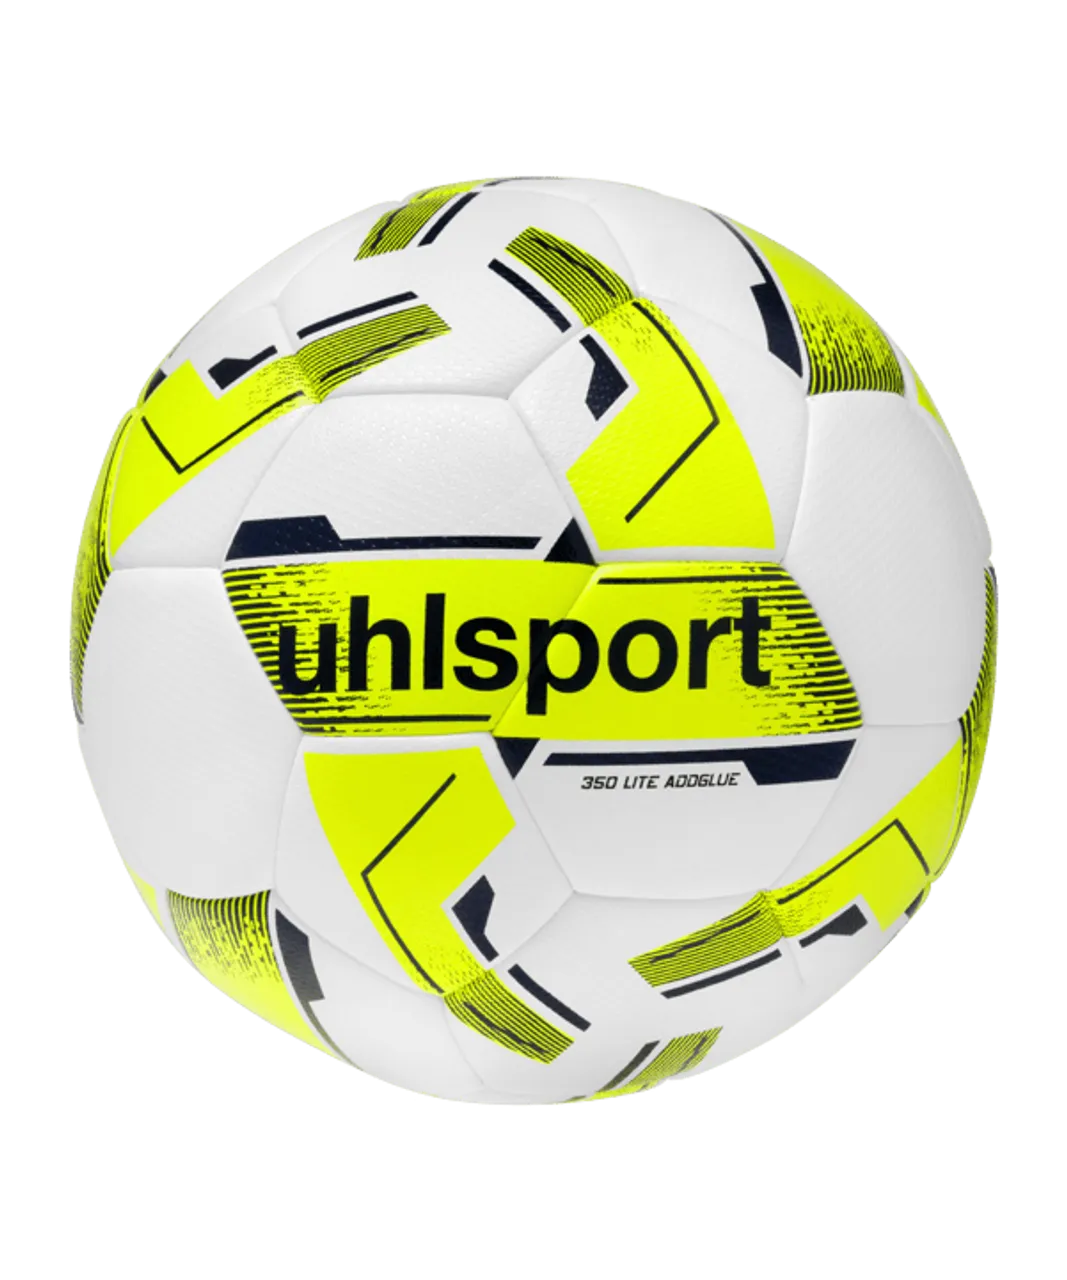 Uhlsport 350 Lite Addglue Trainingsball Weiss Gelb F02